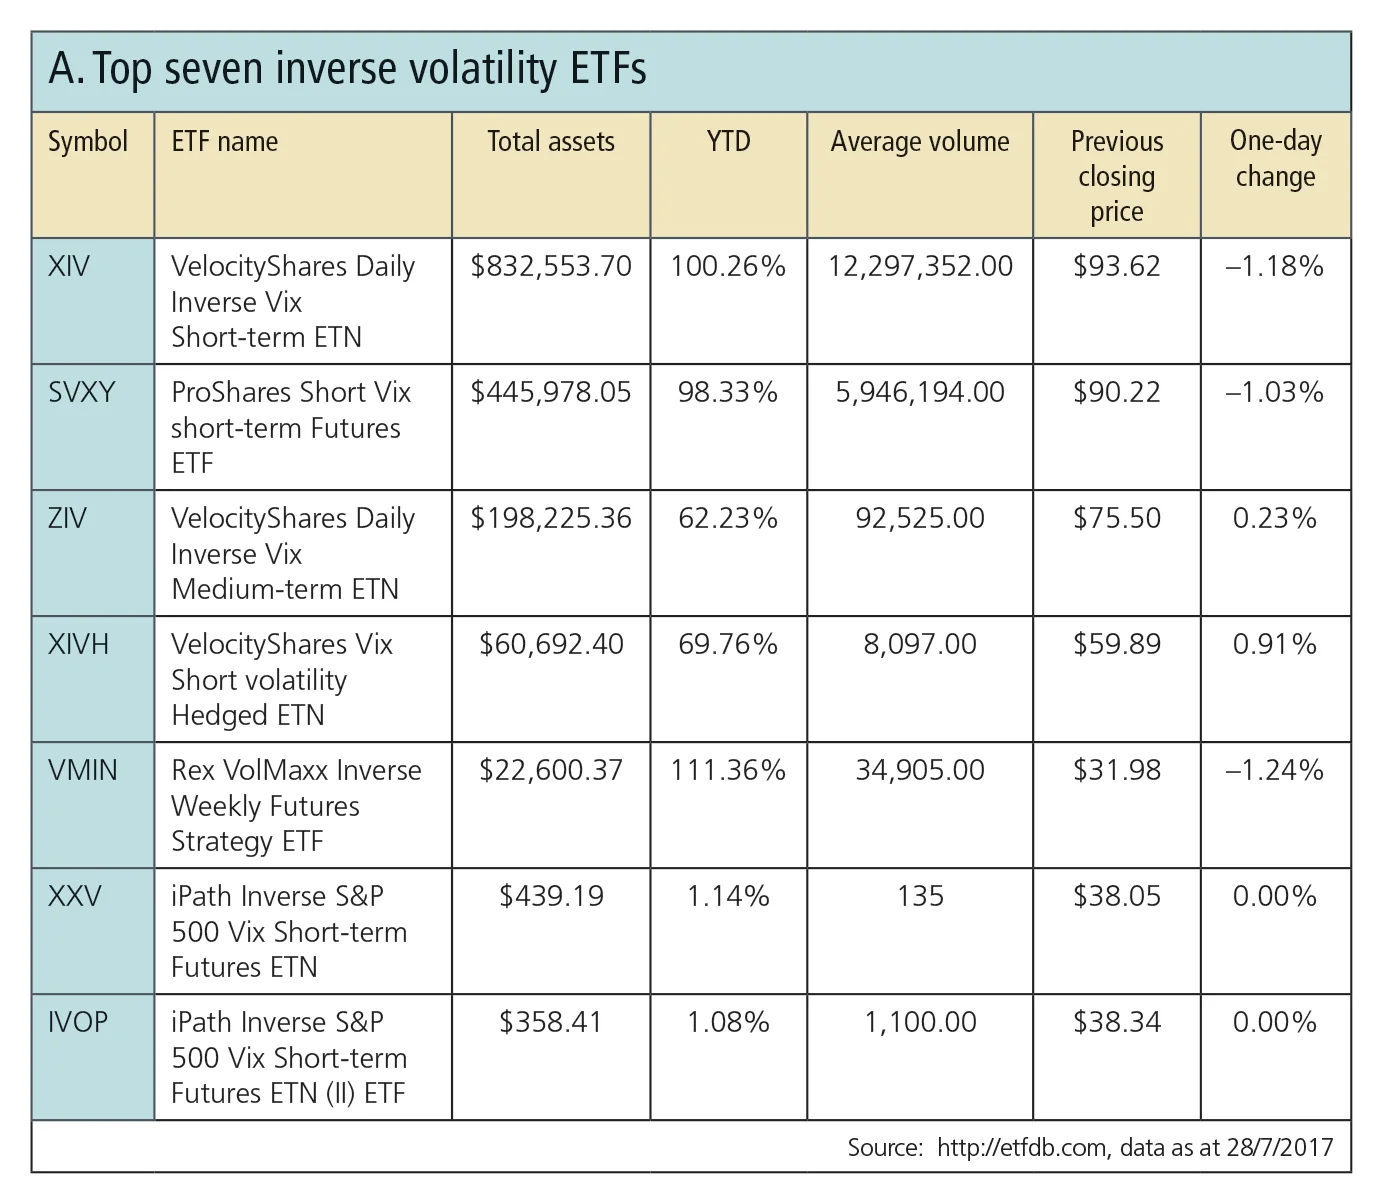 Top 7 inverse volatility ETFs